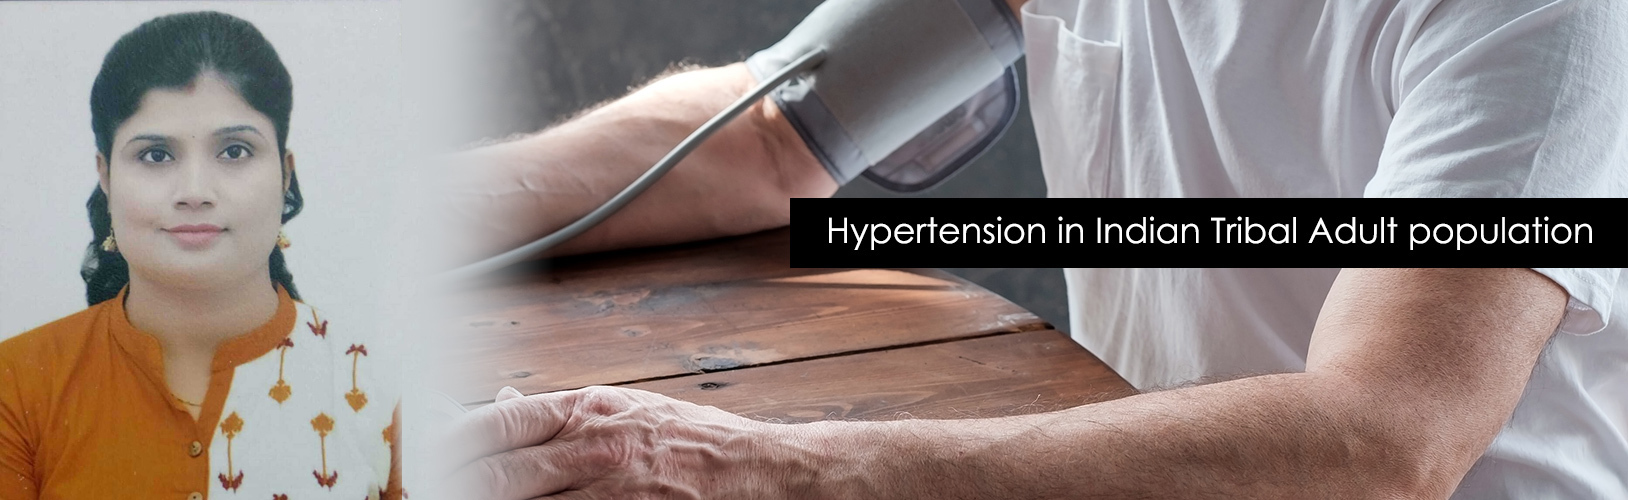 Hypertension and its risk factors in rural Delhi